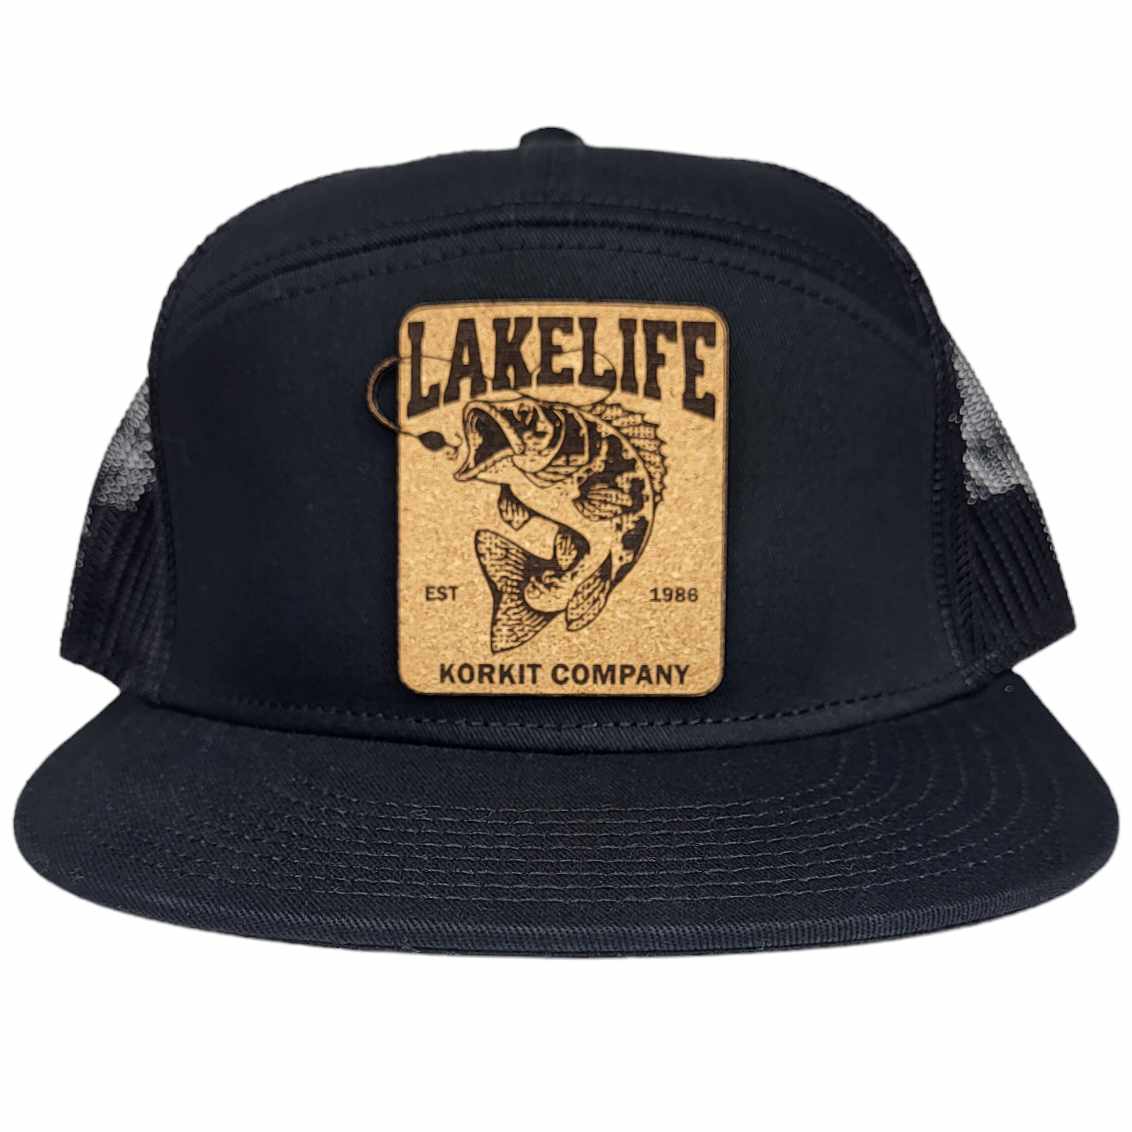 Fish'n Lake Life Hat